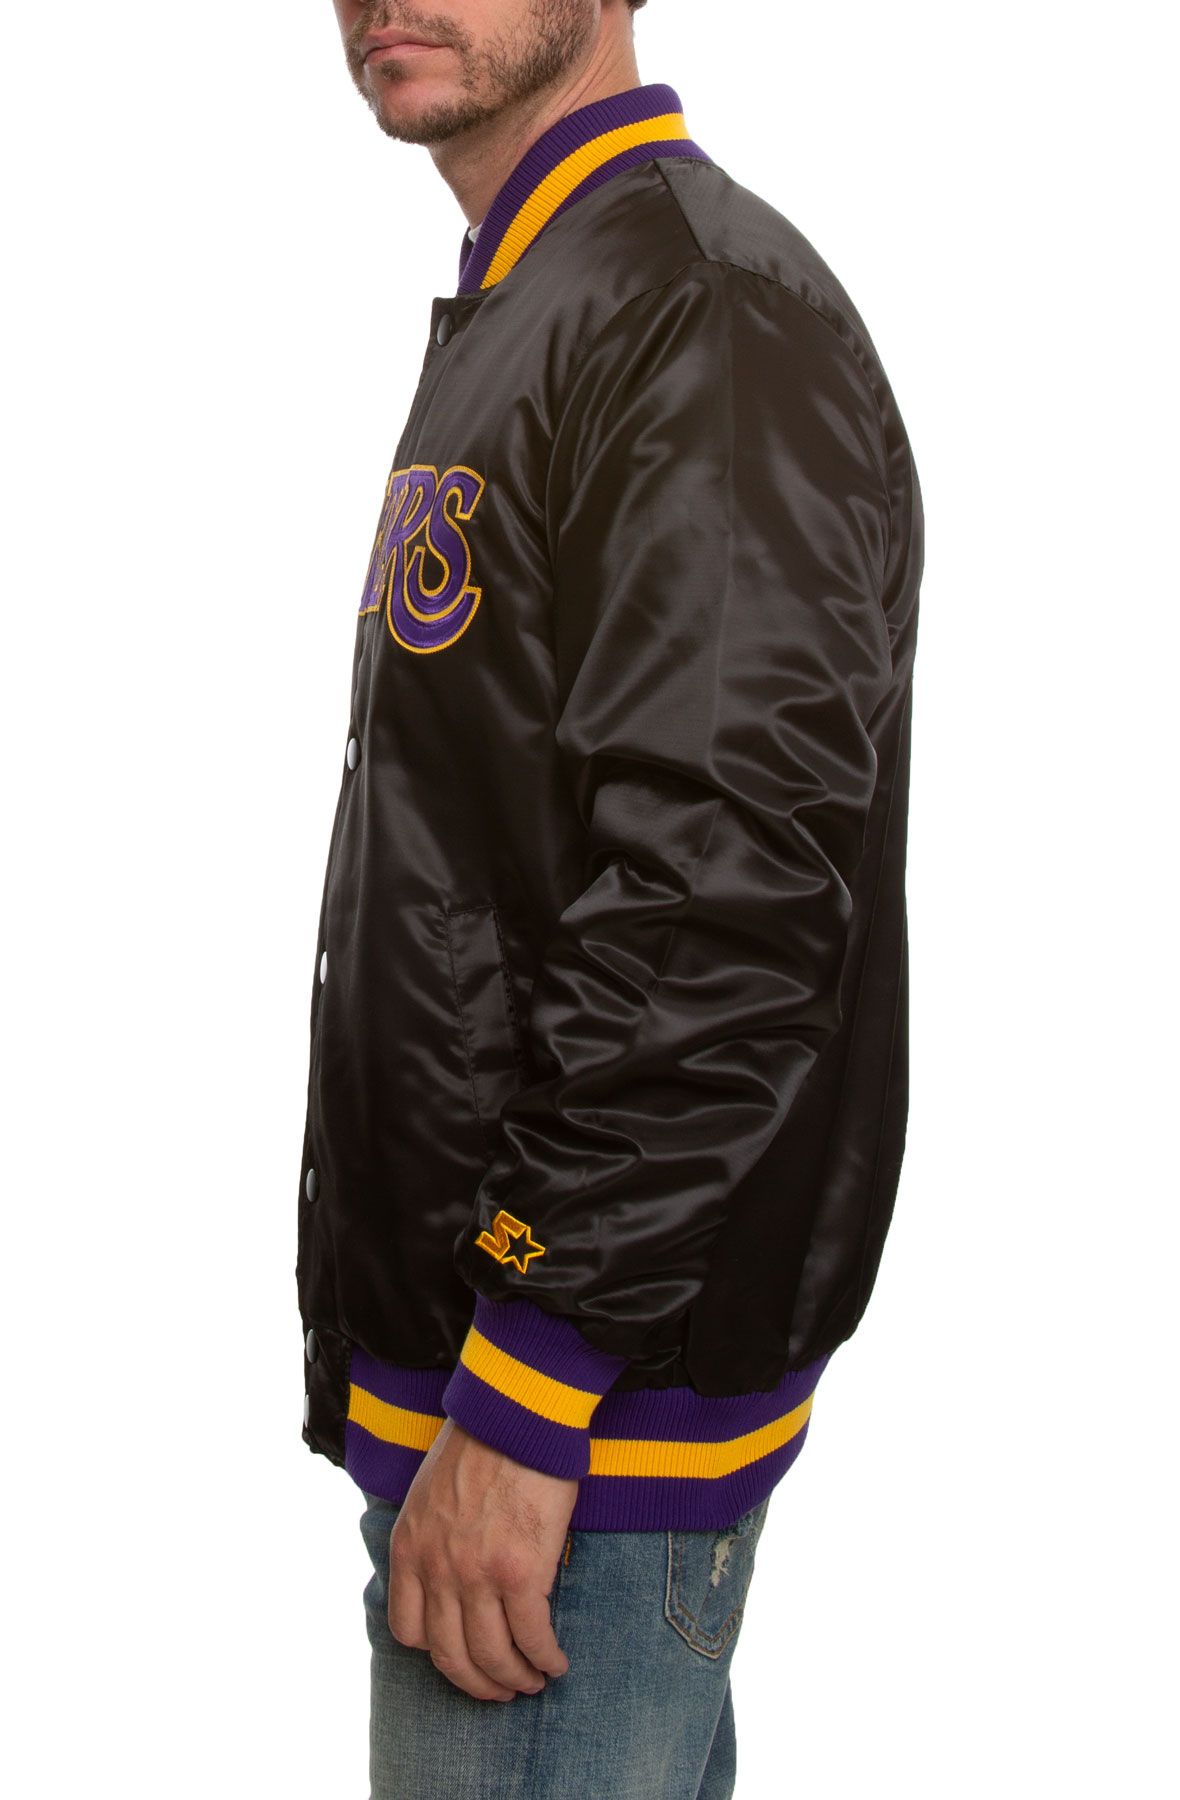 Los Angeles Lakers Jacket